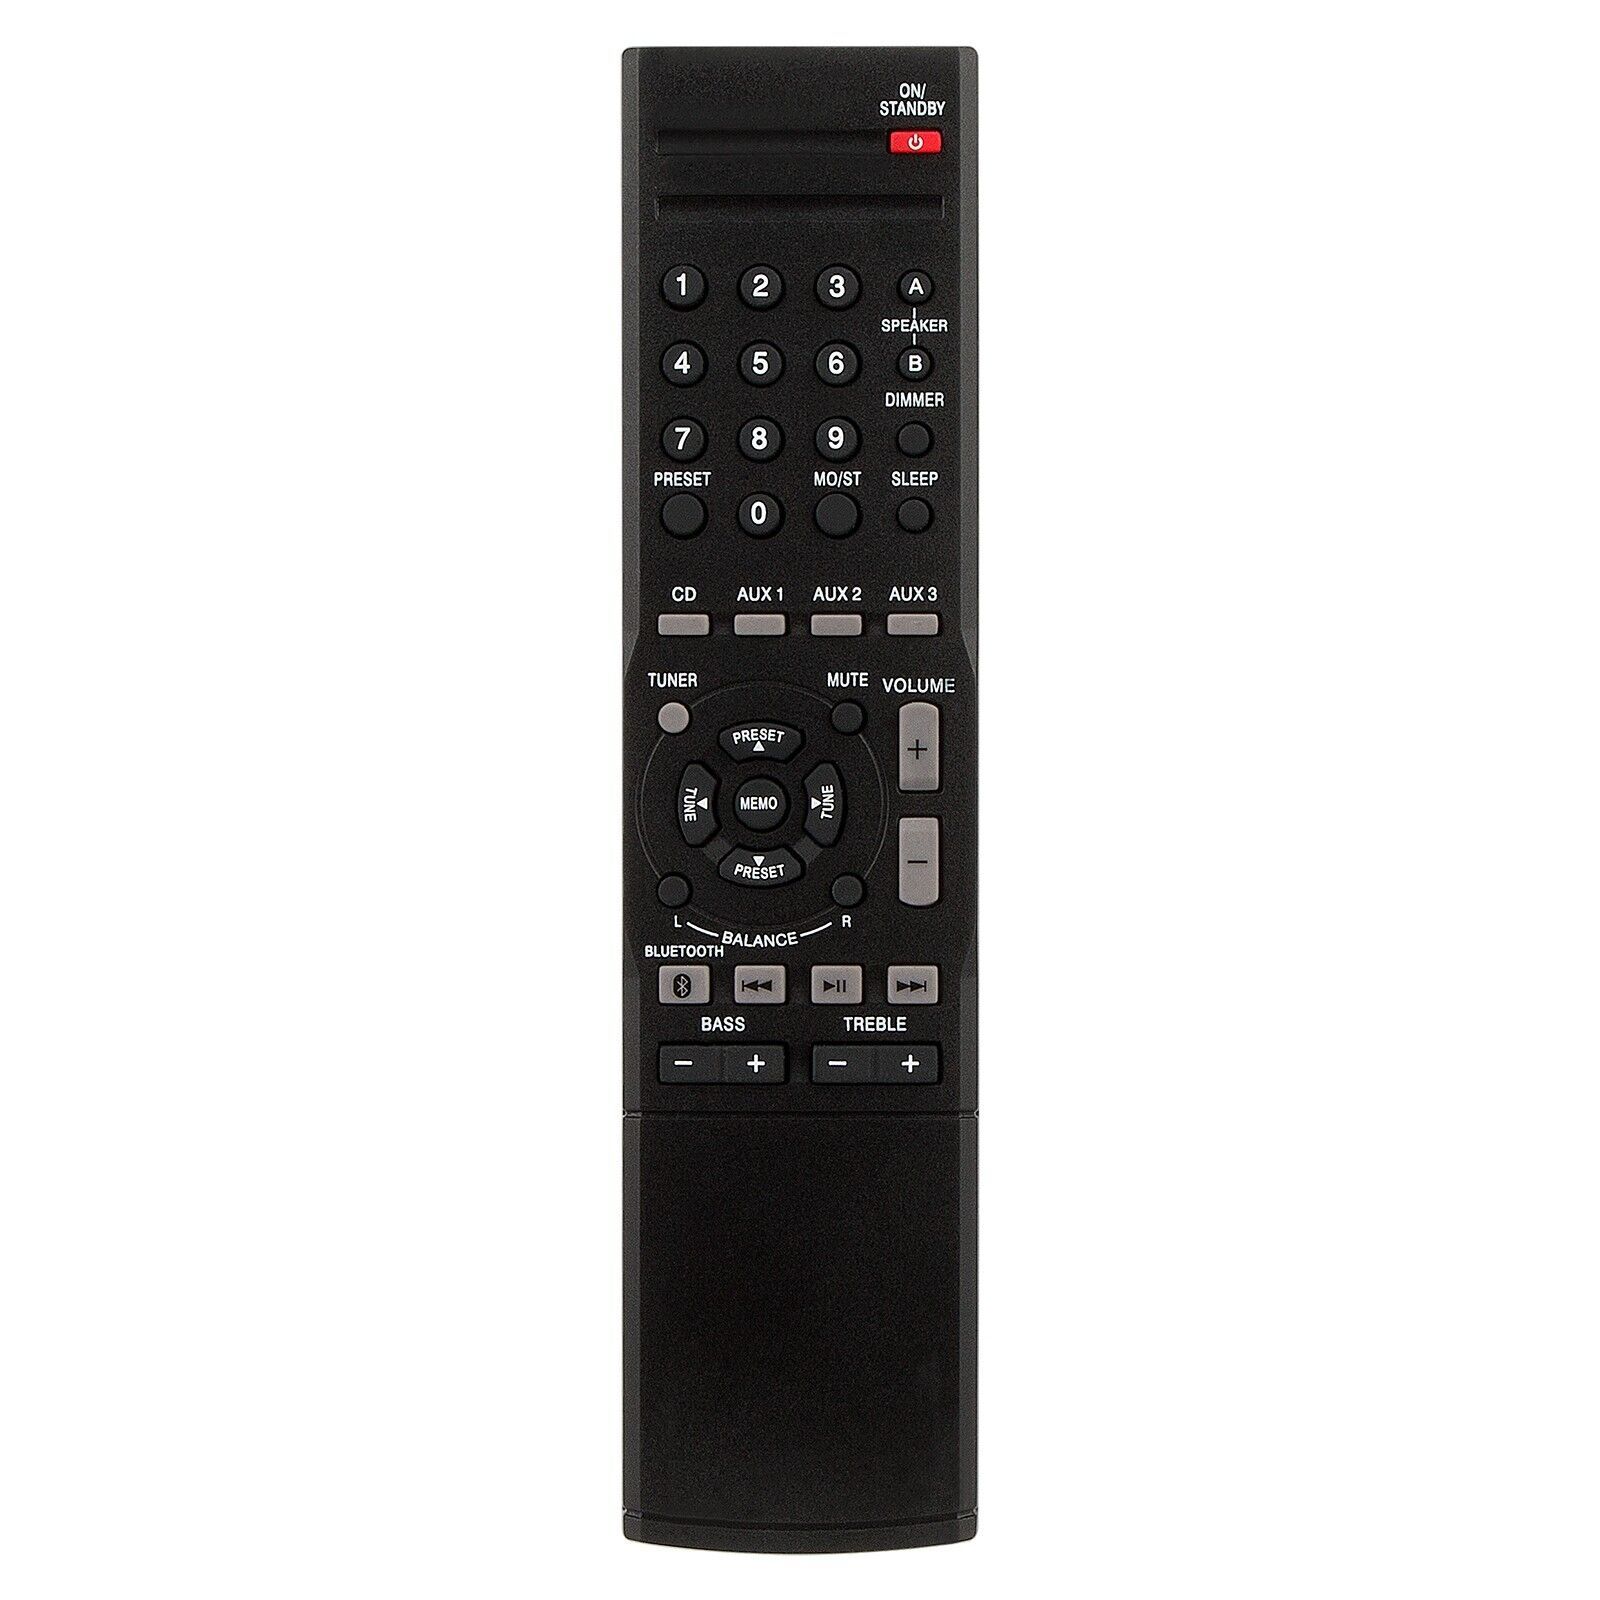 Rmc-Str514 Remotecontrol Fit For Insignia Stereo Receiver Nsstr514 Ns-Str514 - $23.78